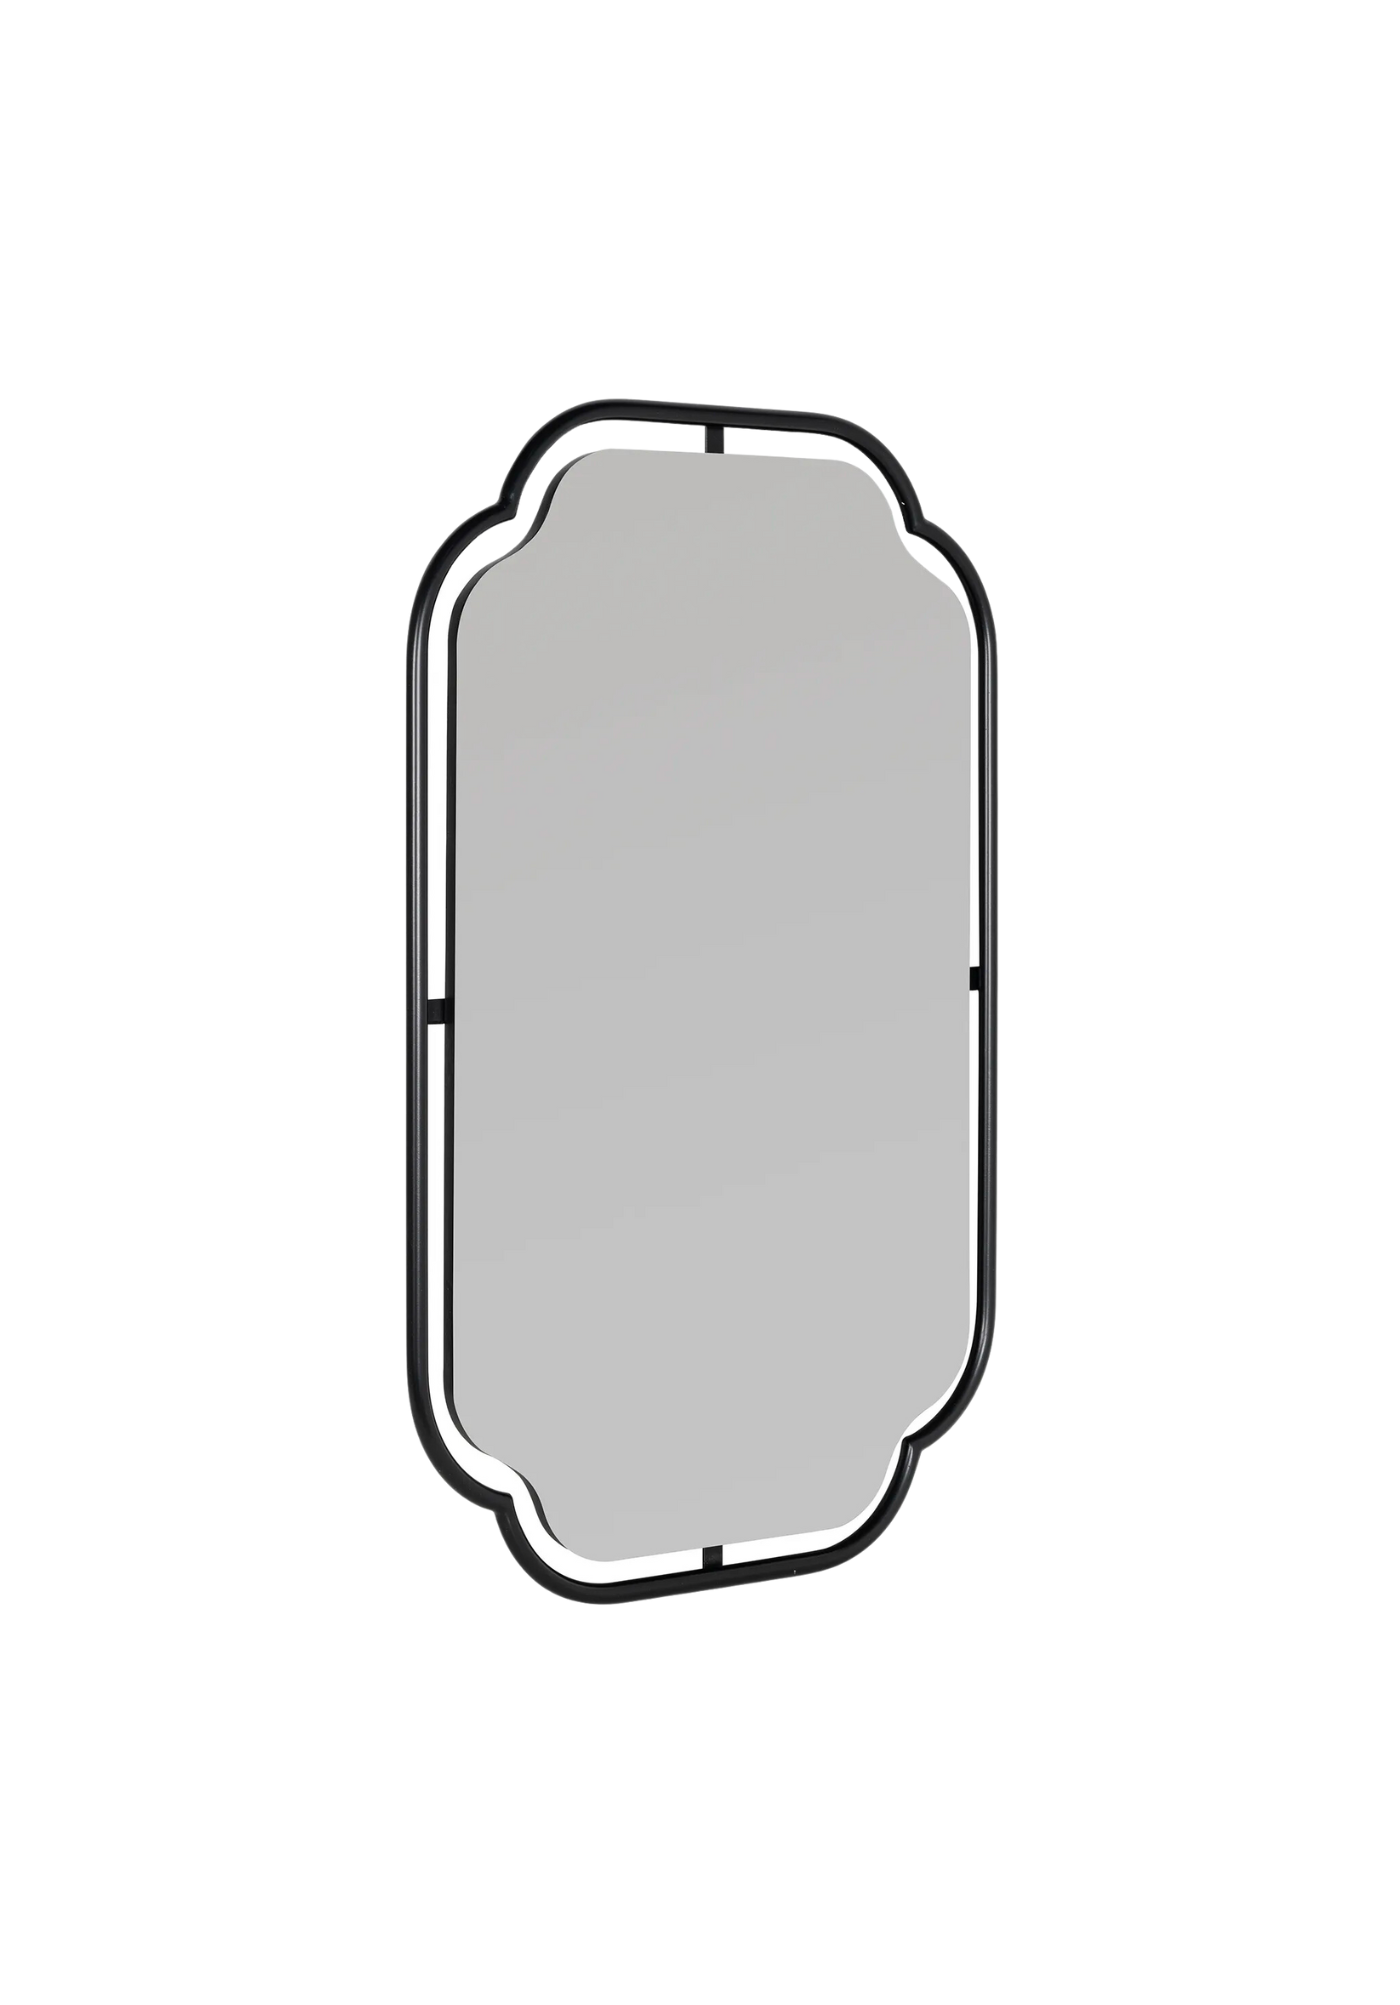 Oval Shaped Black Metal Mirror